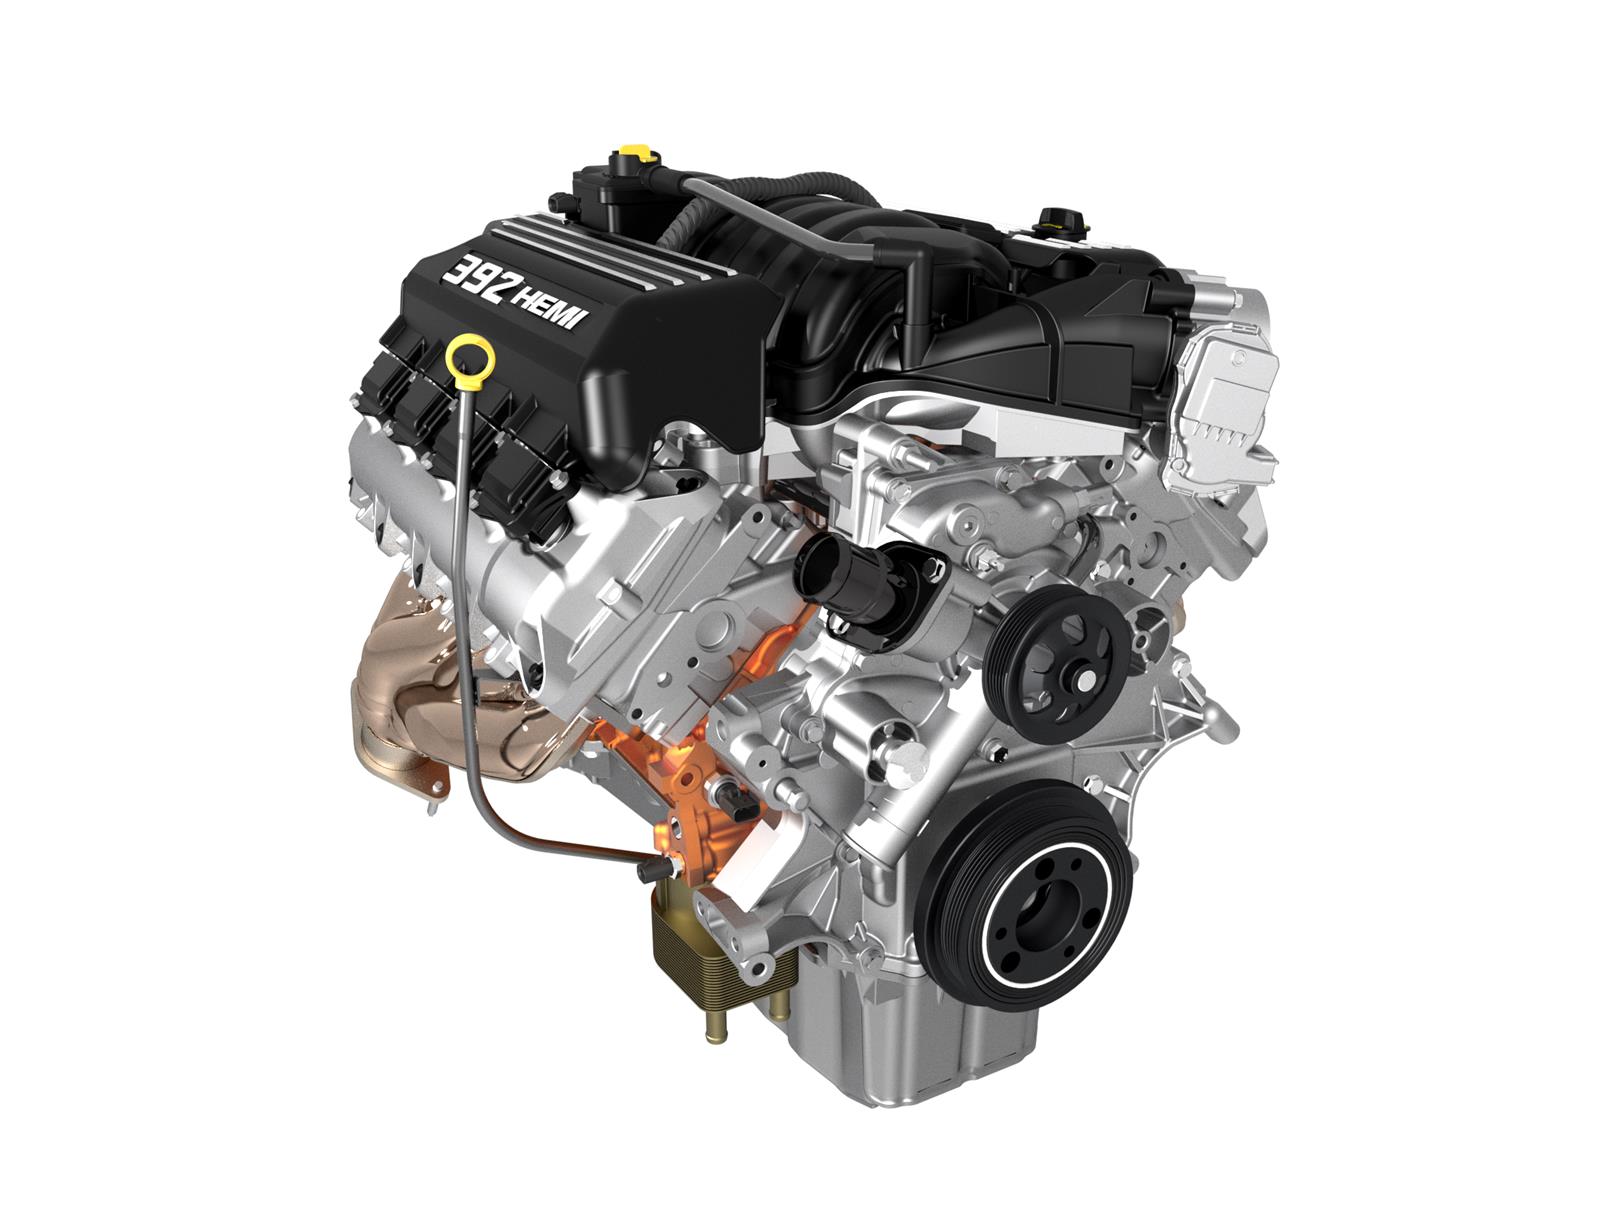 Mopar Performance 6.4L Hemi 485 HP SRT Crate Engine